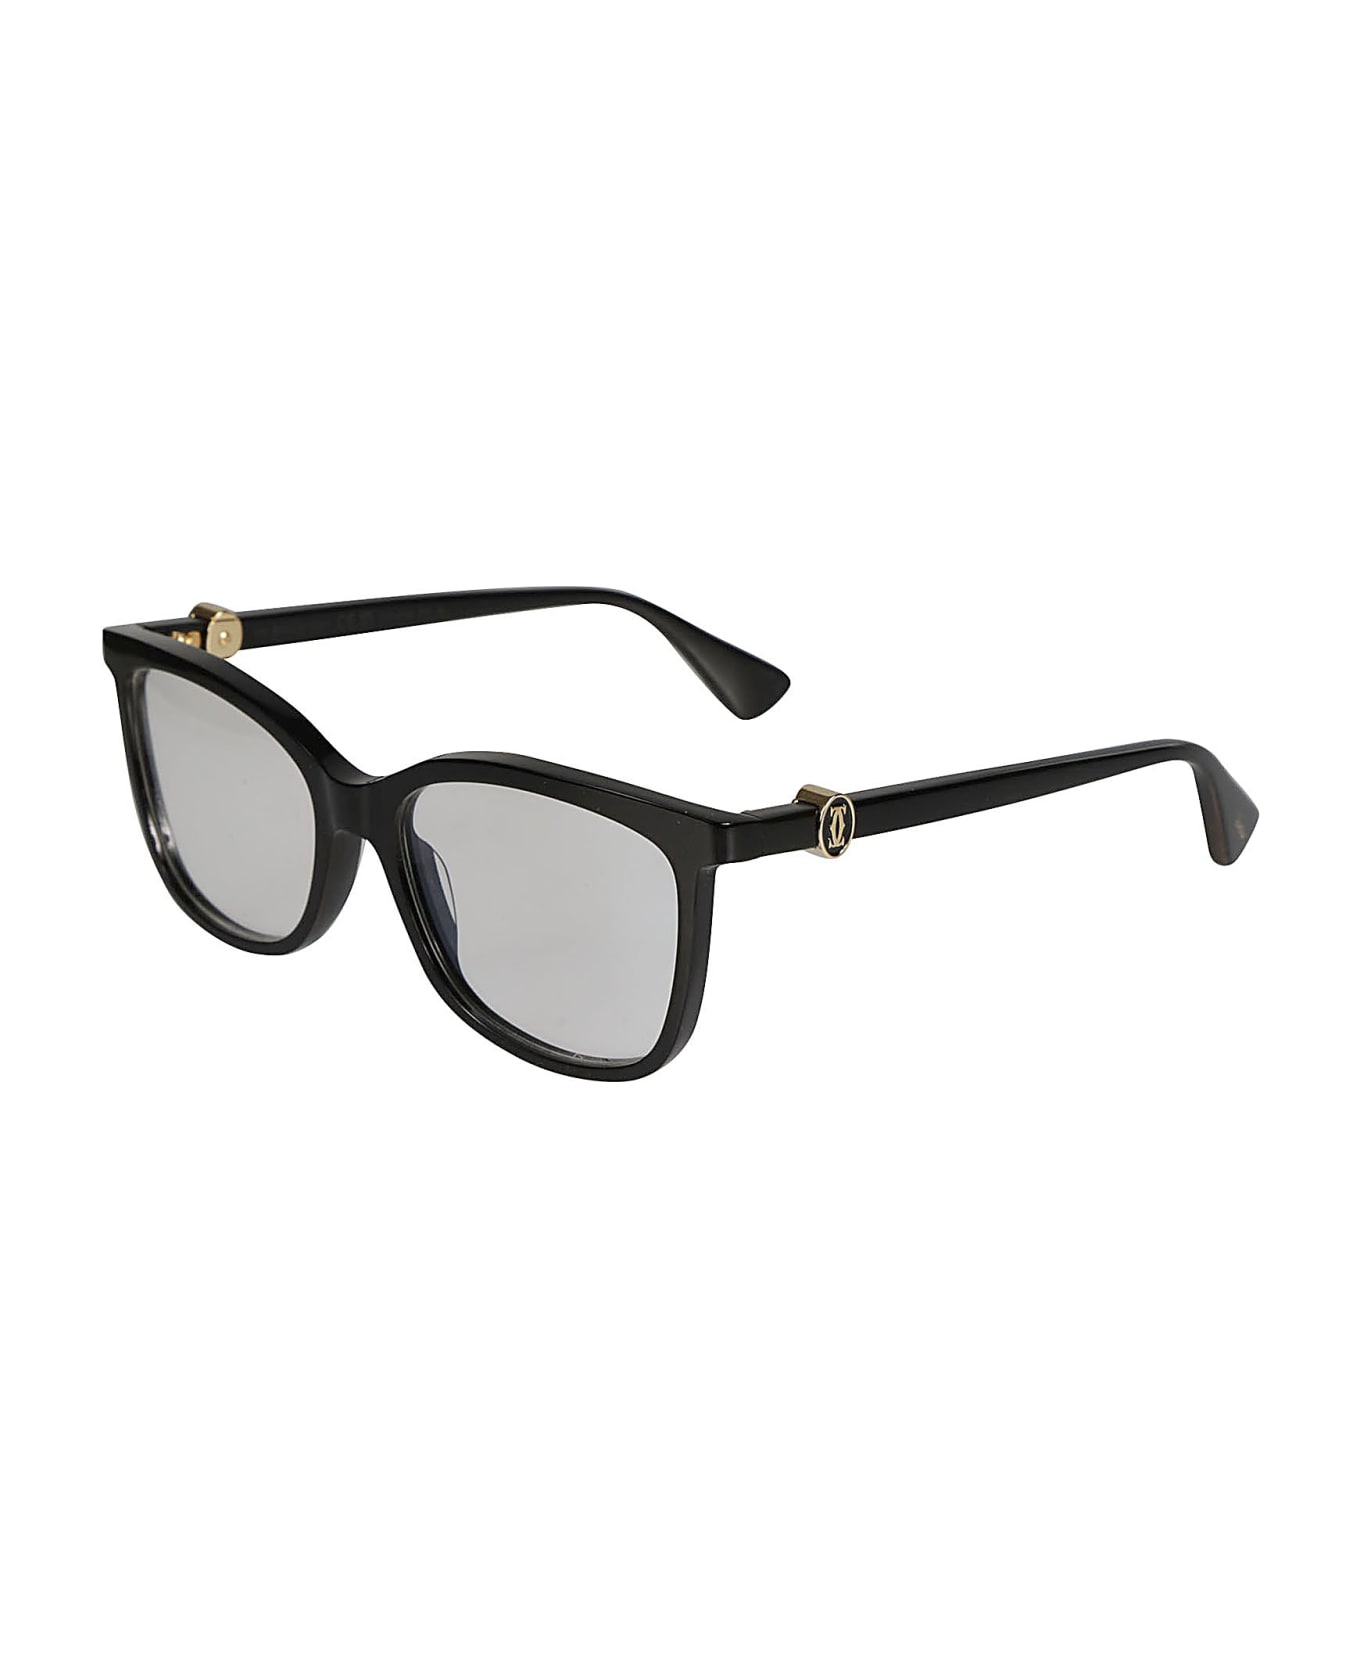 Cartier Eyewear Classic Logo Sided Glasses - Black/Transparent